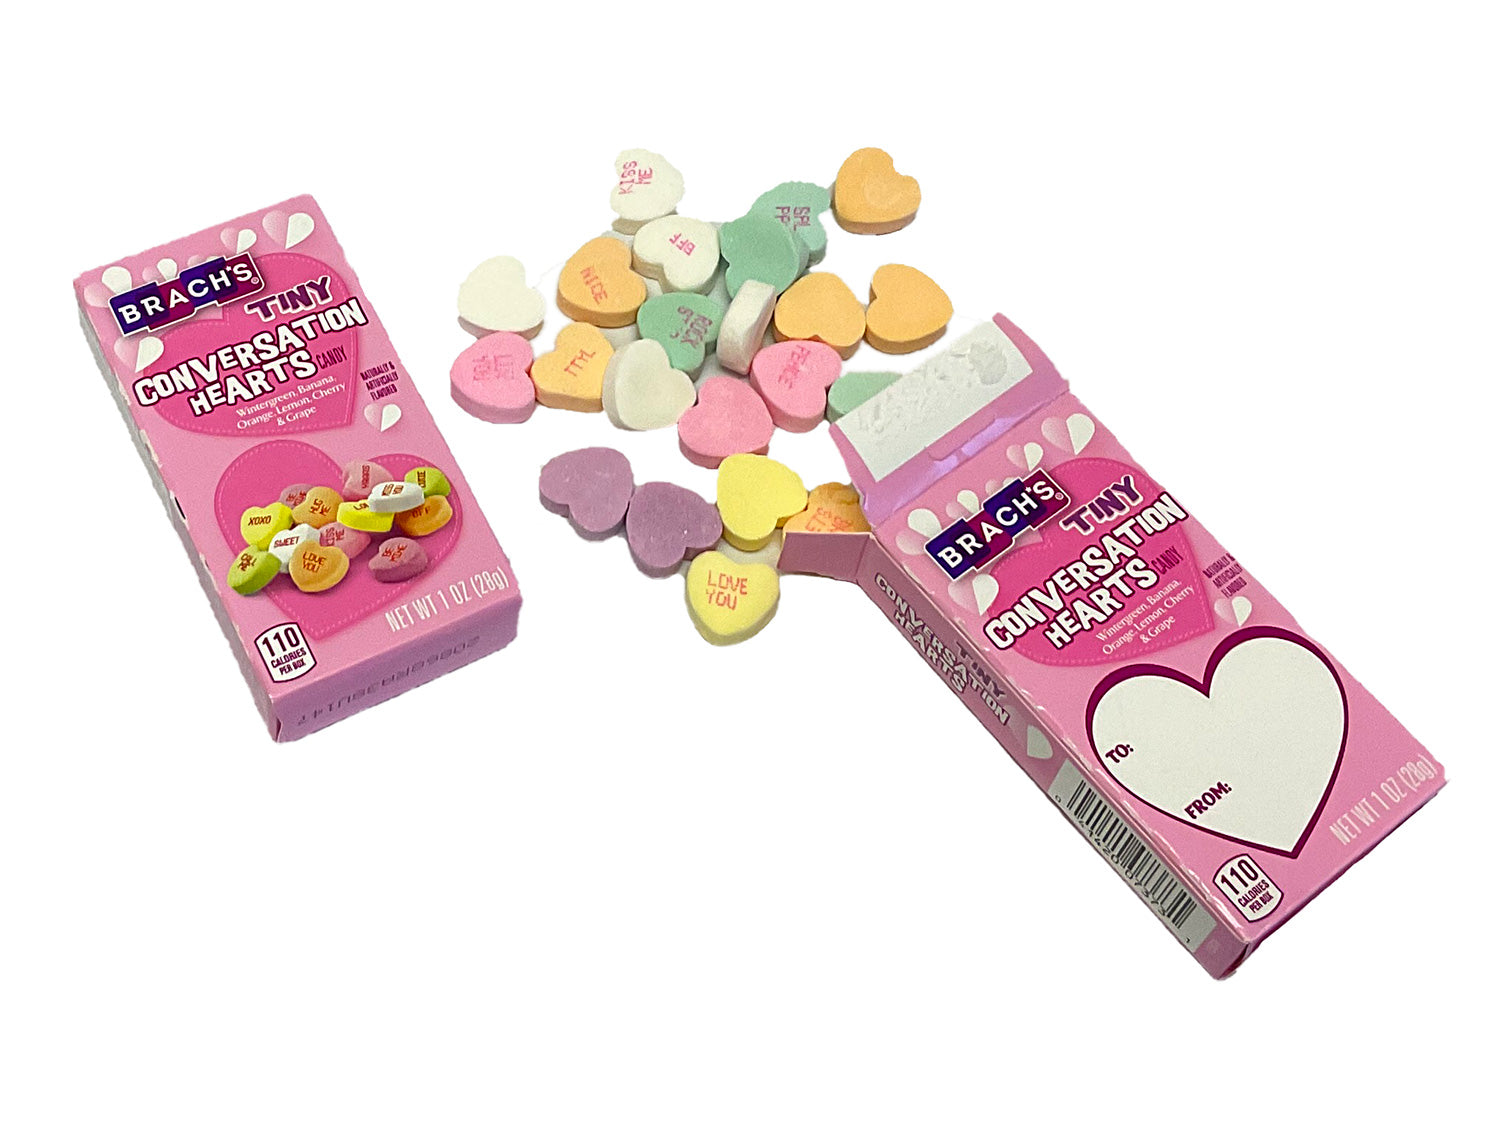 Brach's Limited Edition Valentine's Day Candy, Tiny Conversation